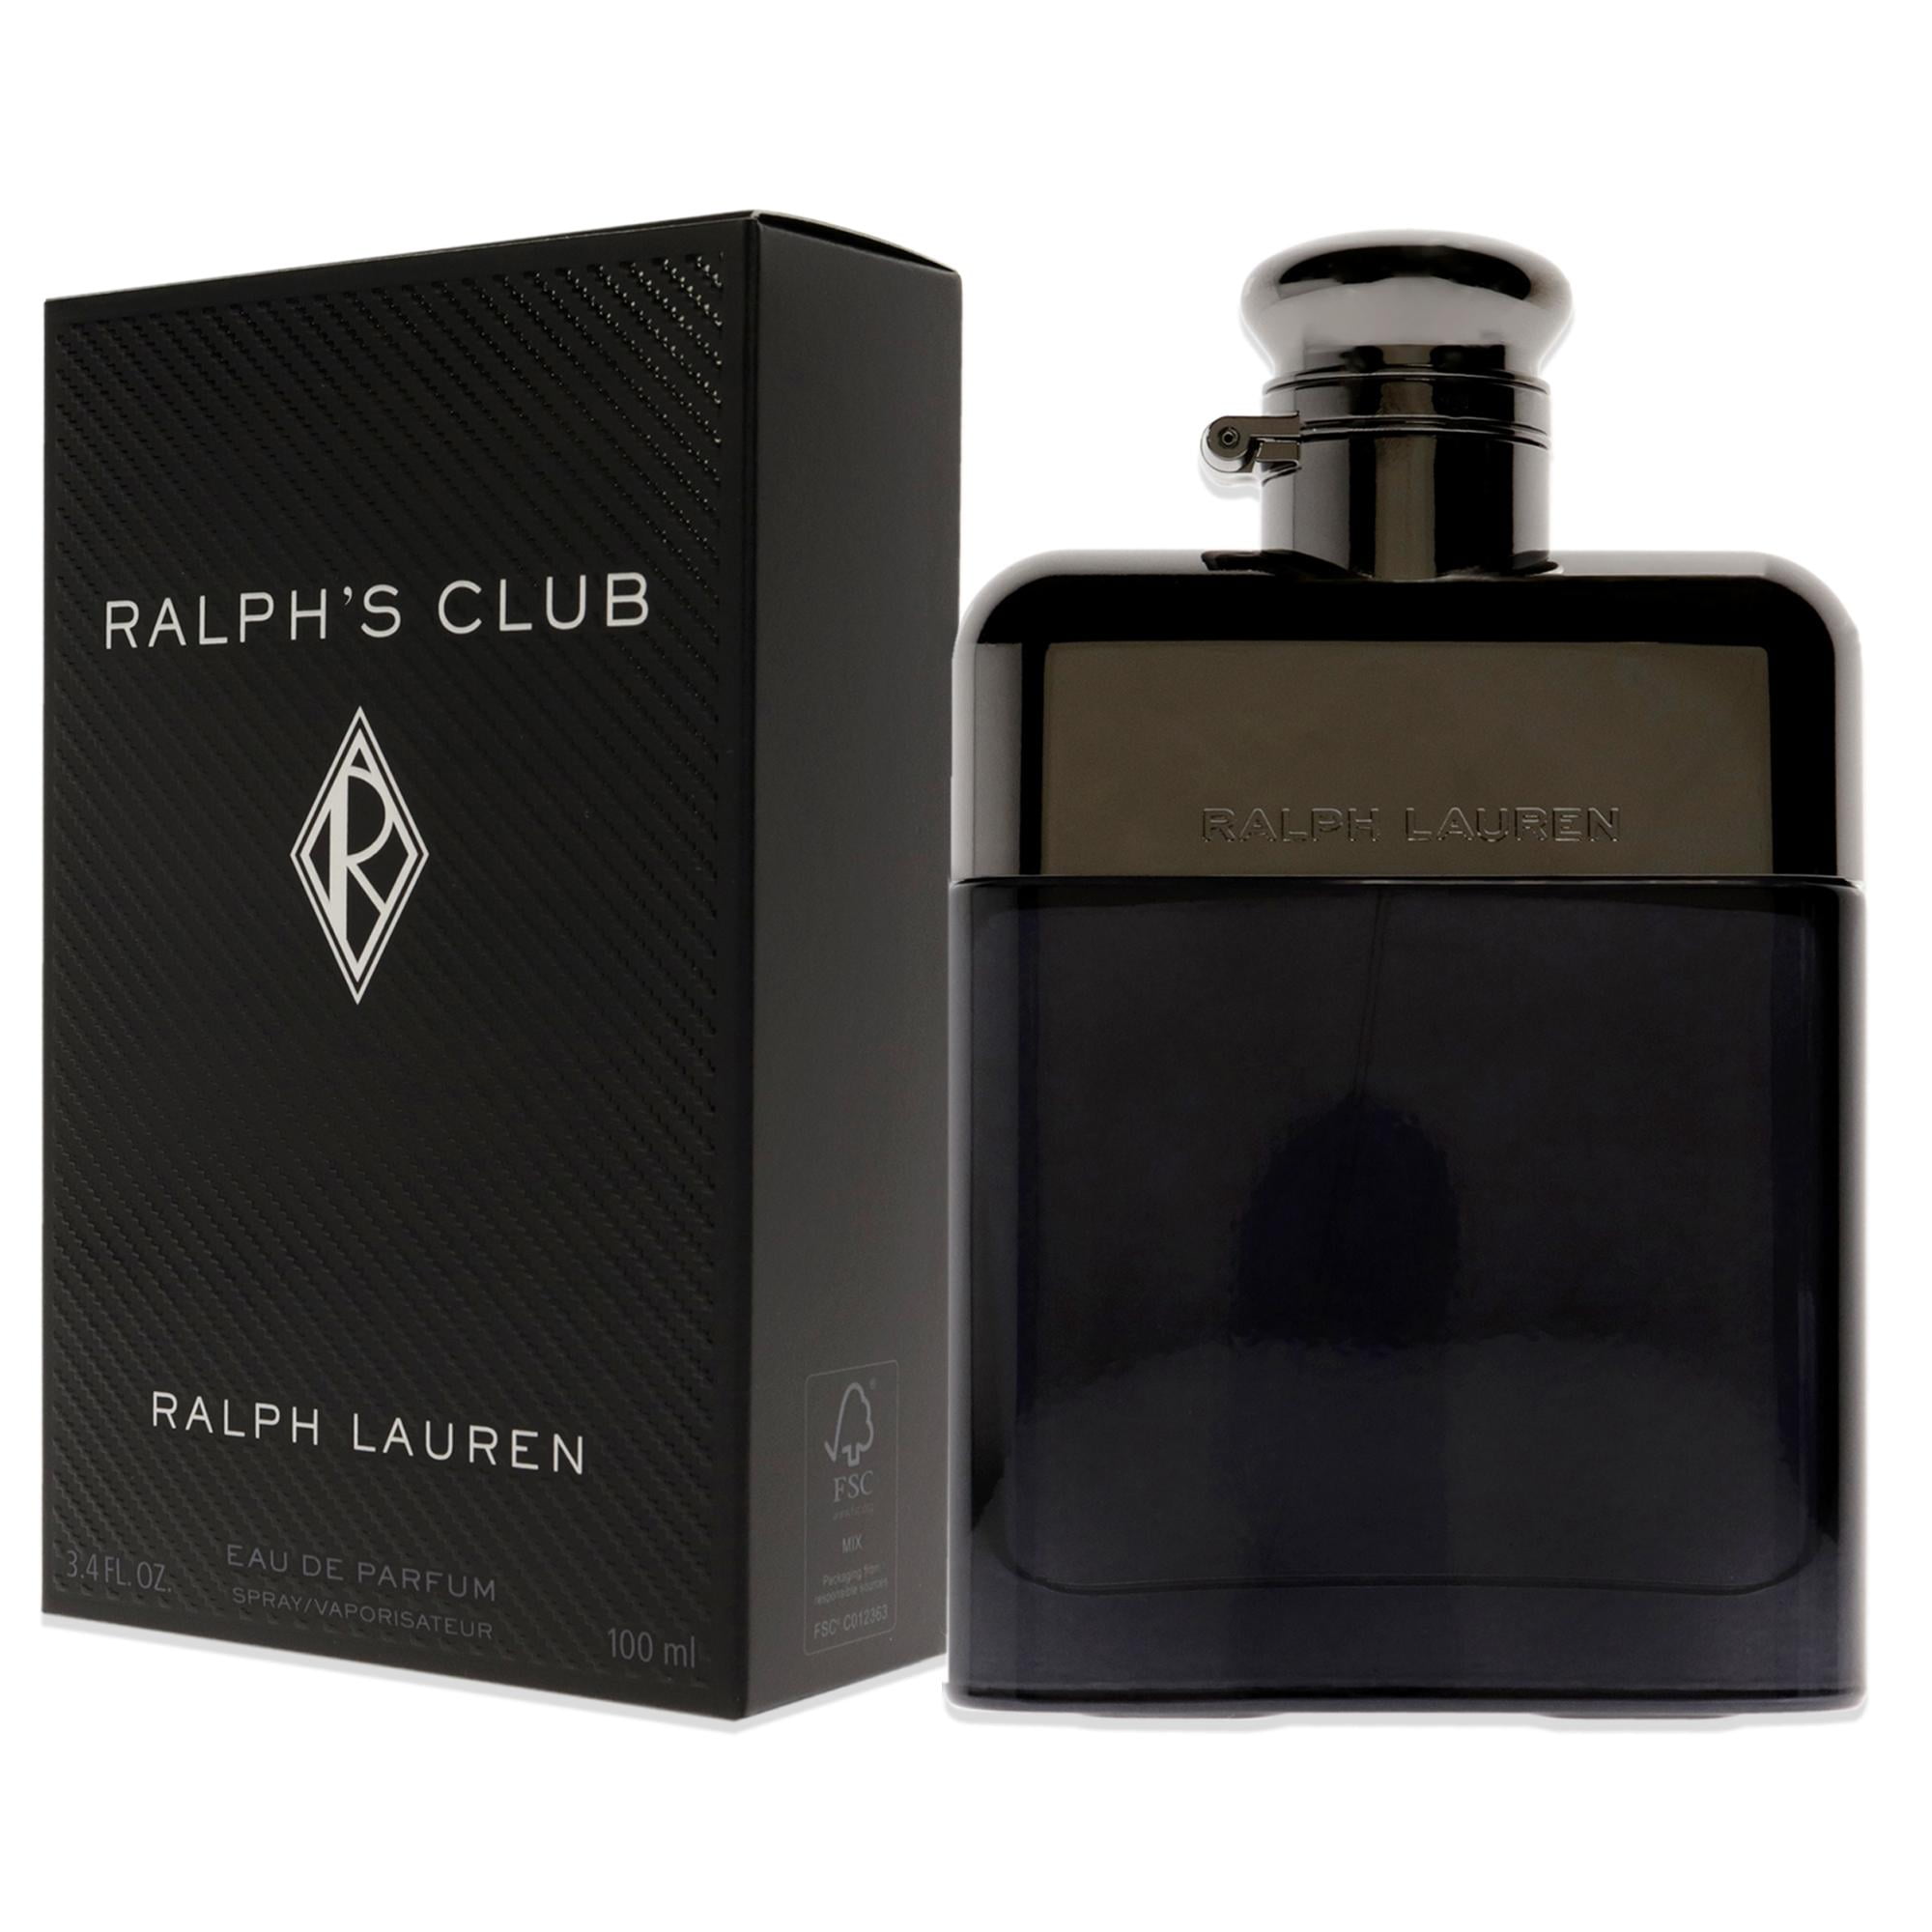 Ralph Lauren Ralph's Club Eau de Parfum Travel Spray - 0.34 fl oz